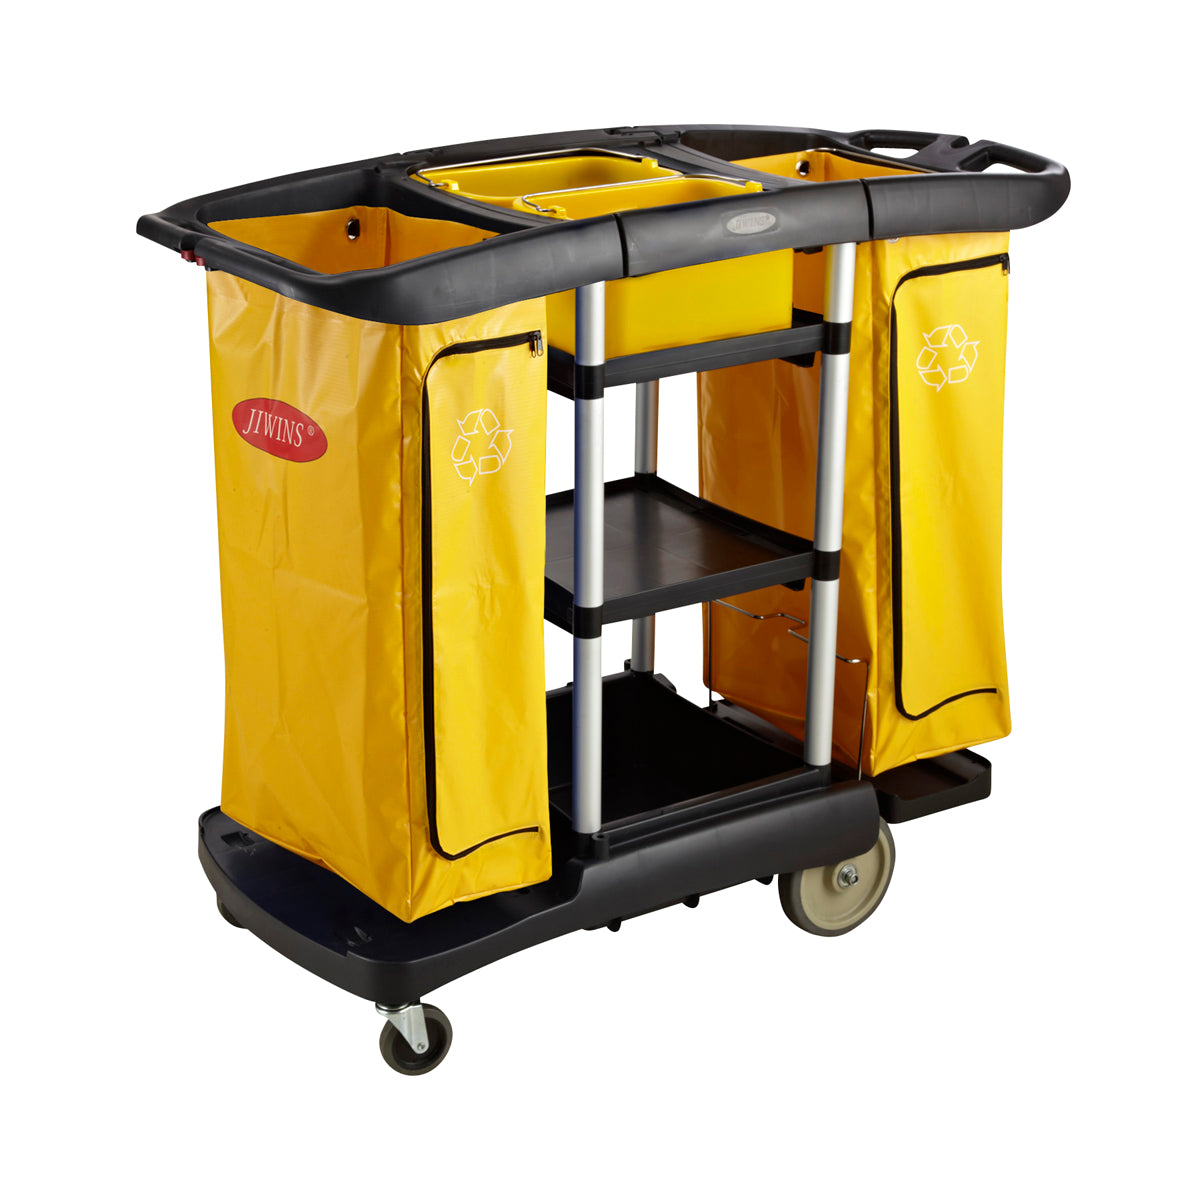 JW-CCHD Jiwins High Capacity Cleaning Cart Black 1301x575x1129mm Tomkin Australia Hospitality Supplies